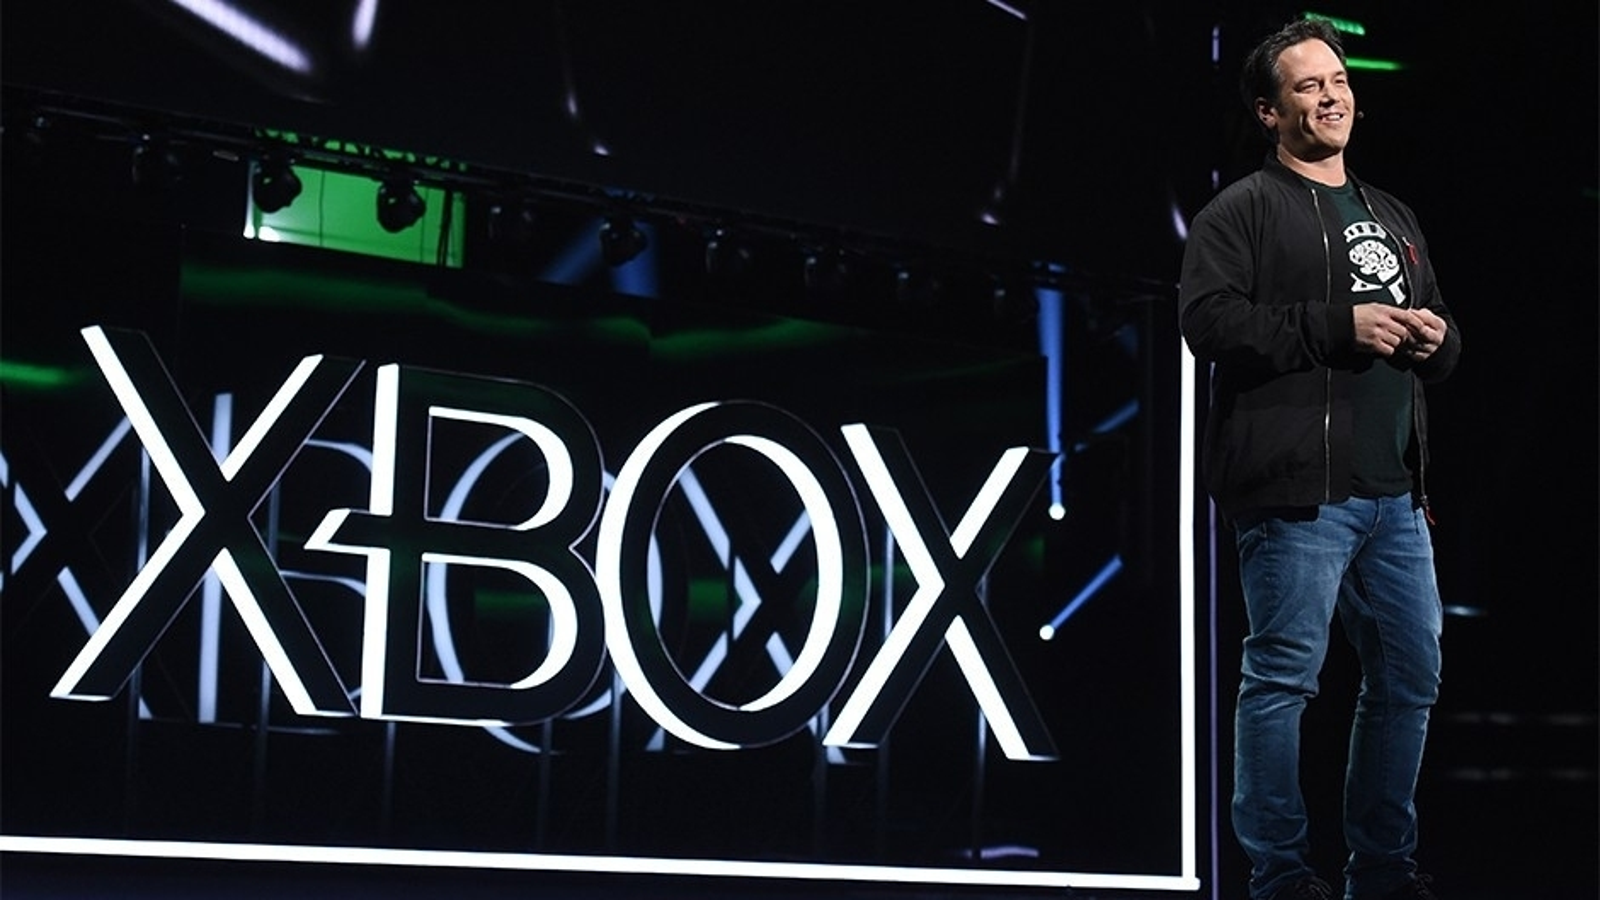 Phil Spencer News - Pure Xbox